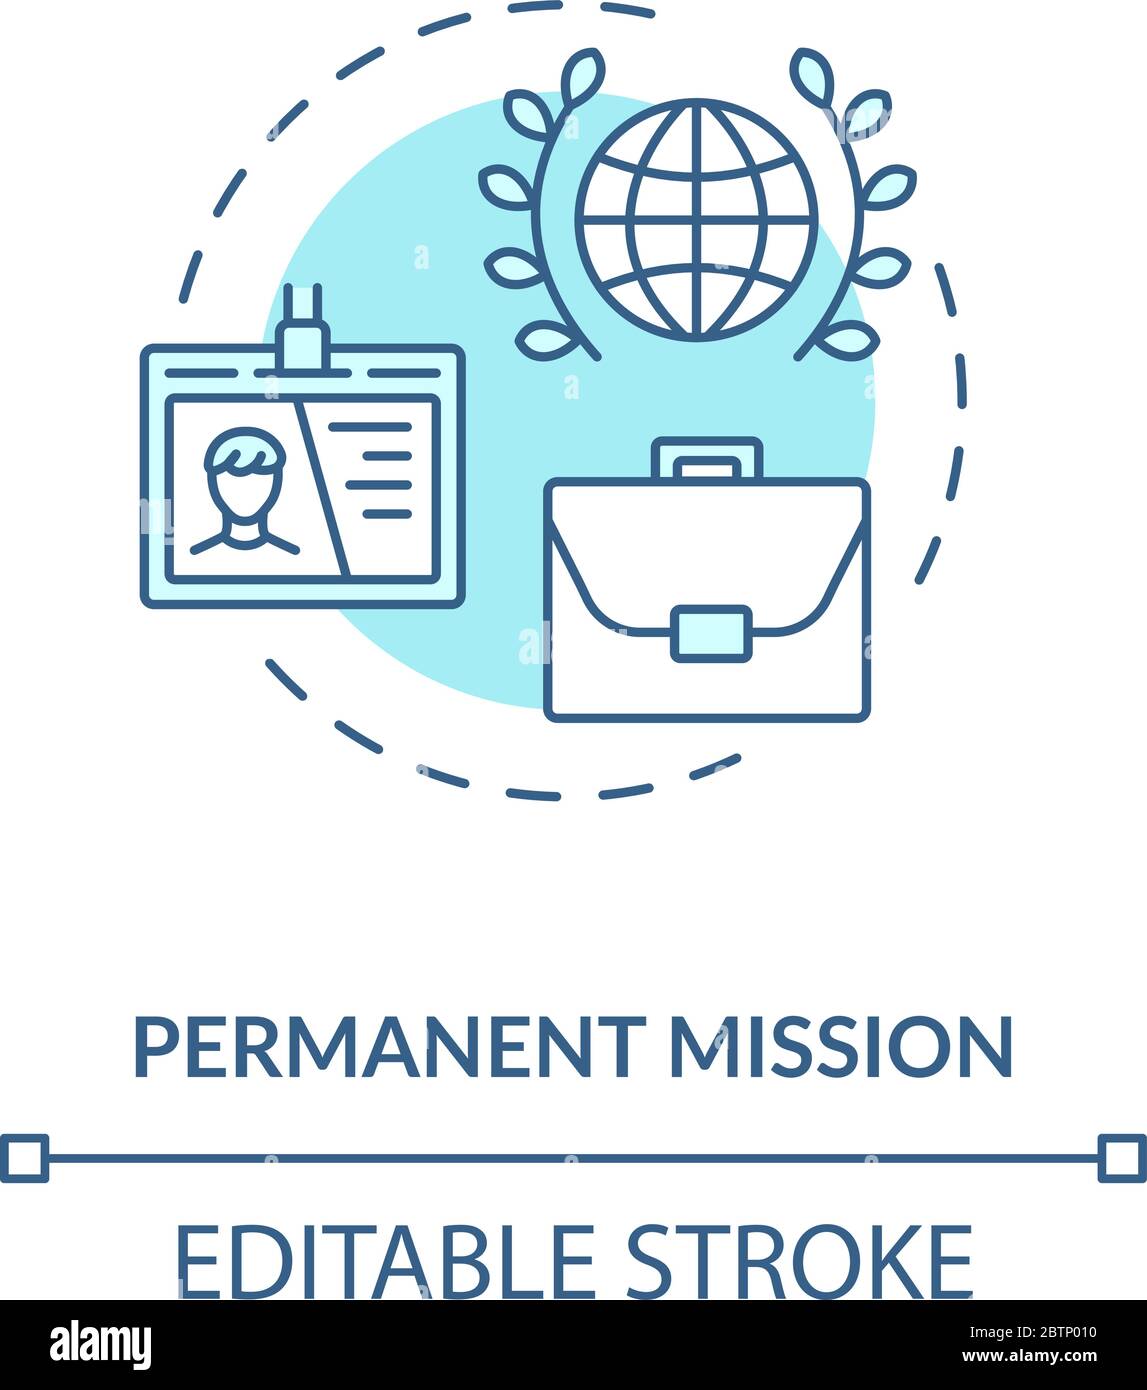 Permanent mission concept icon Stock Vector